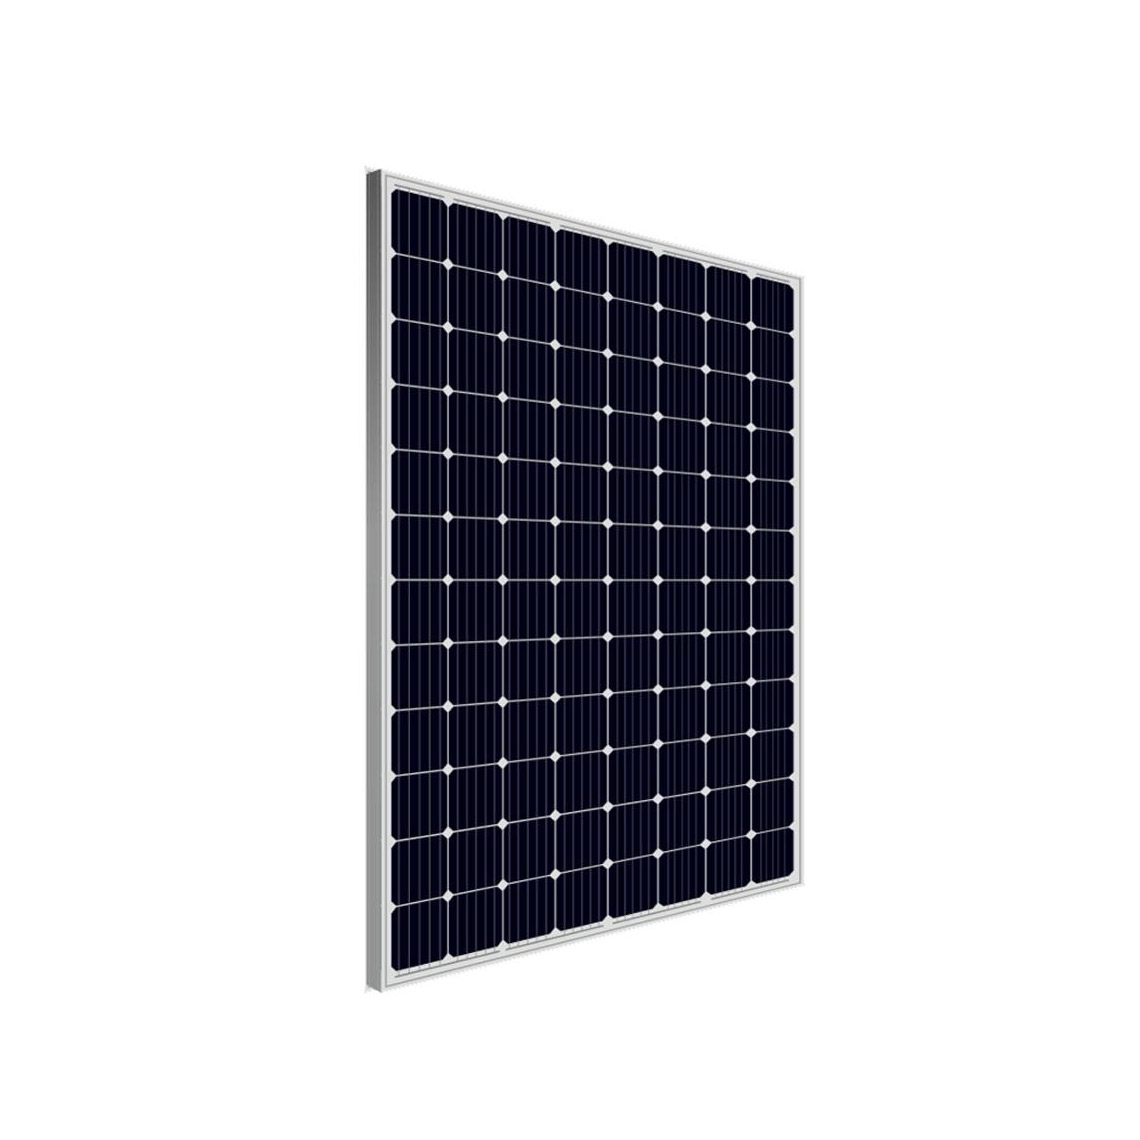 Utilitarian 500w Solar Panel for Sale 